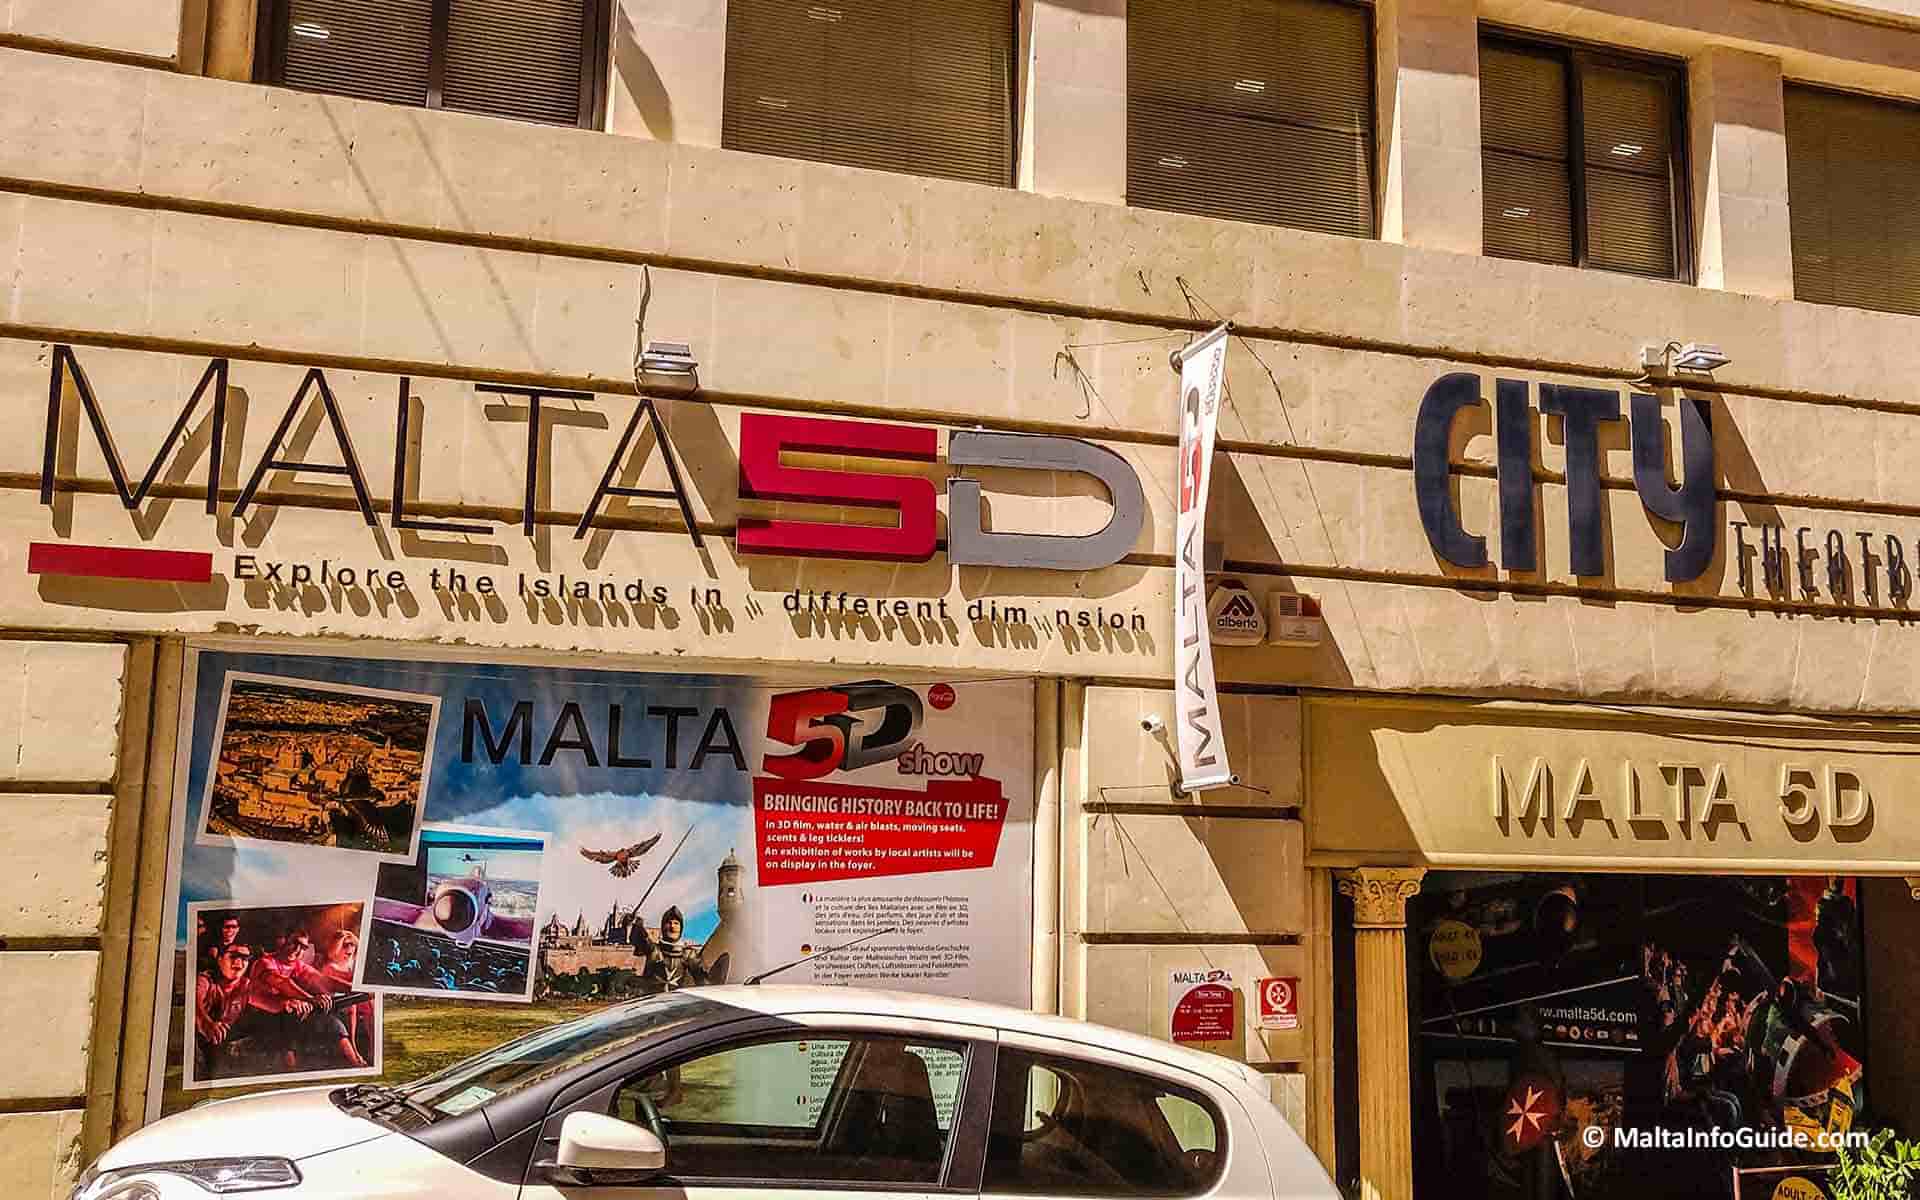 The entrance to the Malta 5D Cinema.